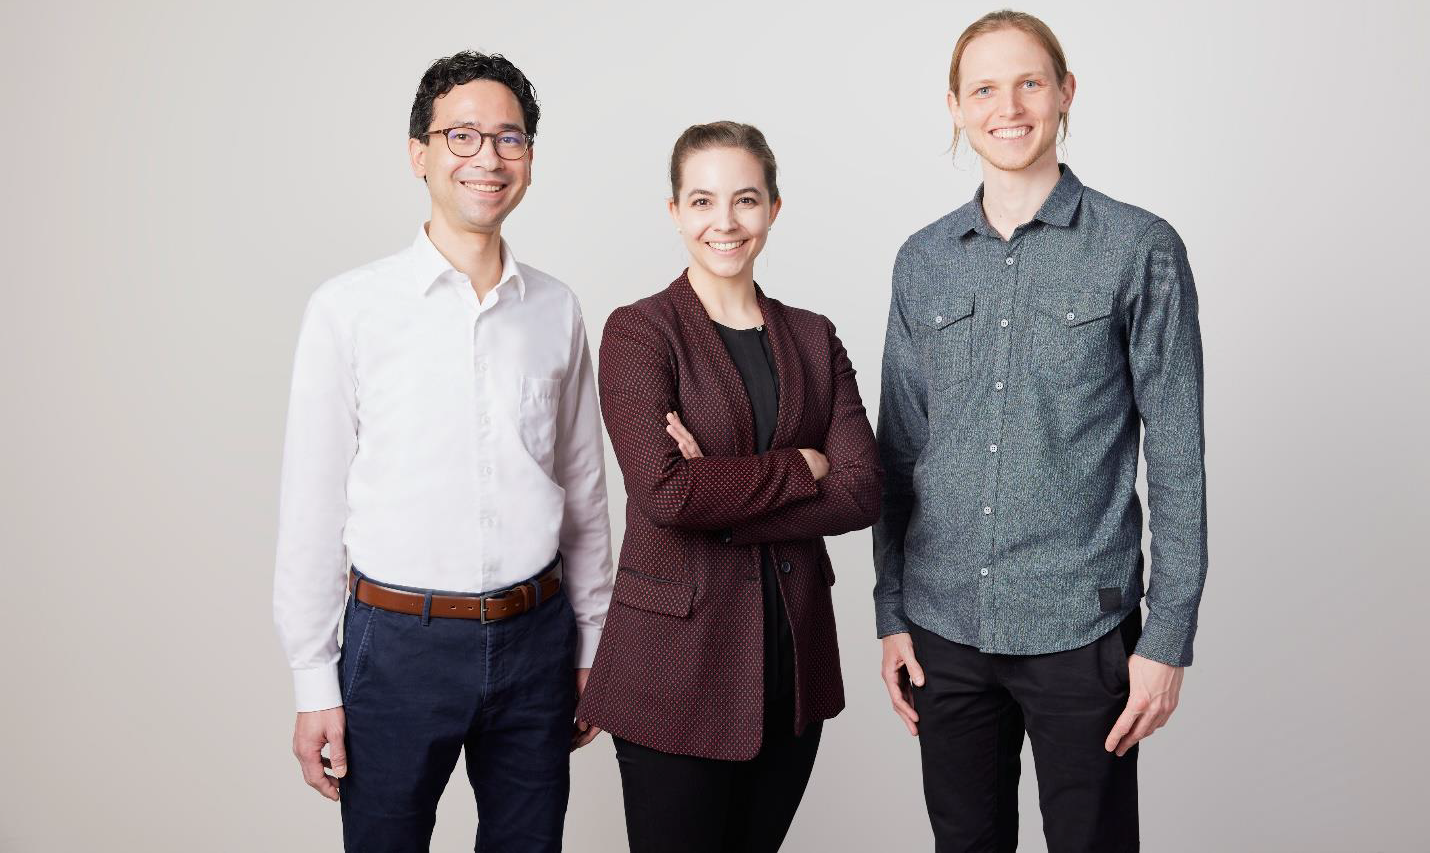 L-R: Weyde Lin (COO), Murielle Schreck (CEO), and Fabian Schmid (CTO)